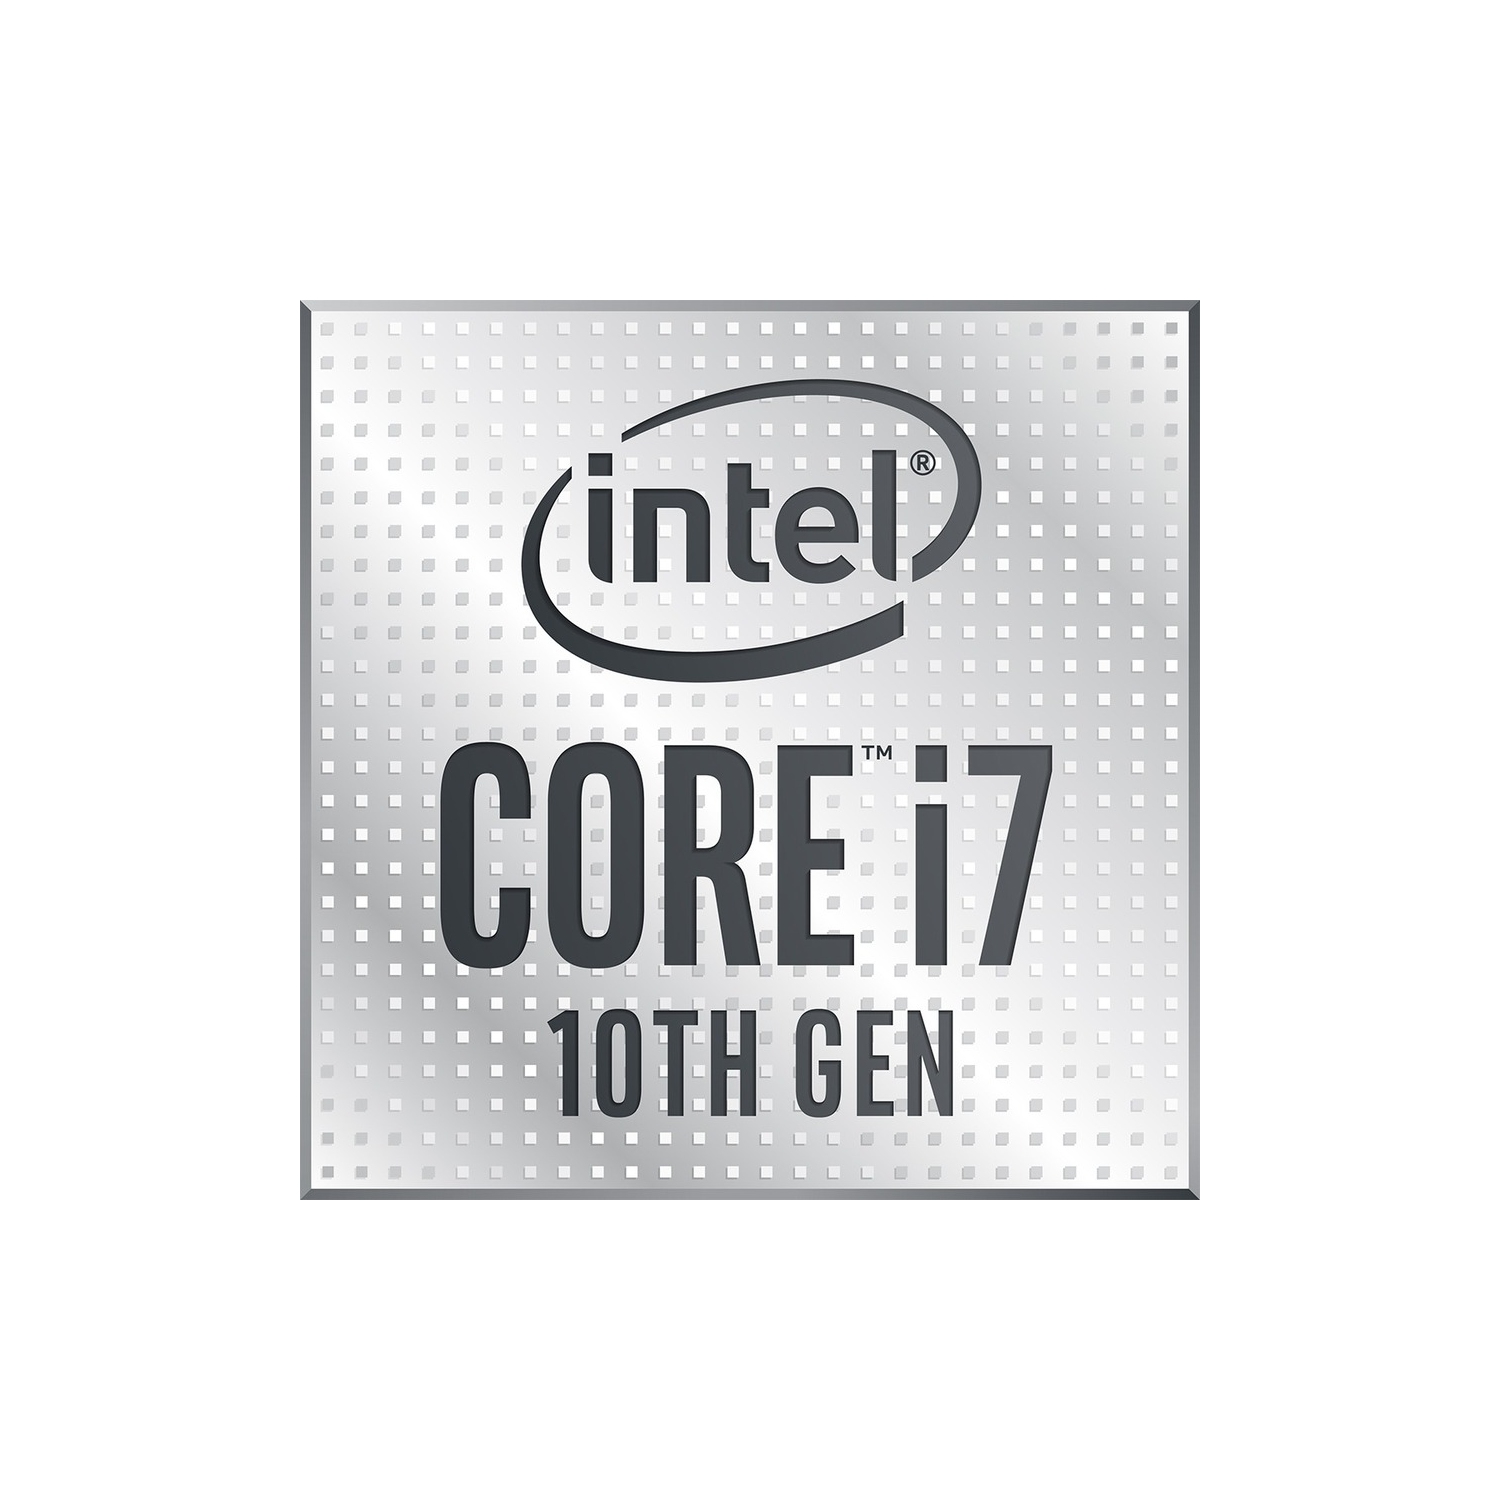 Intel Core i7-10700 10th Gen 8-Core 16-Thread 2.9 GHz (4.80 GHz Turbo) LGA1200 Desktop Processor